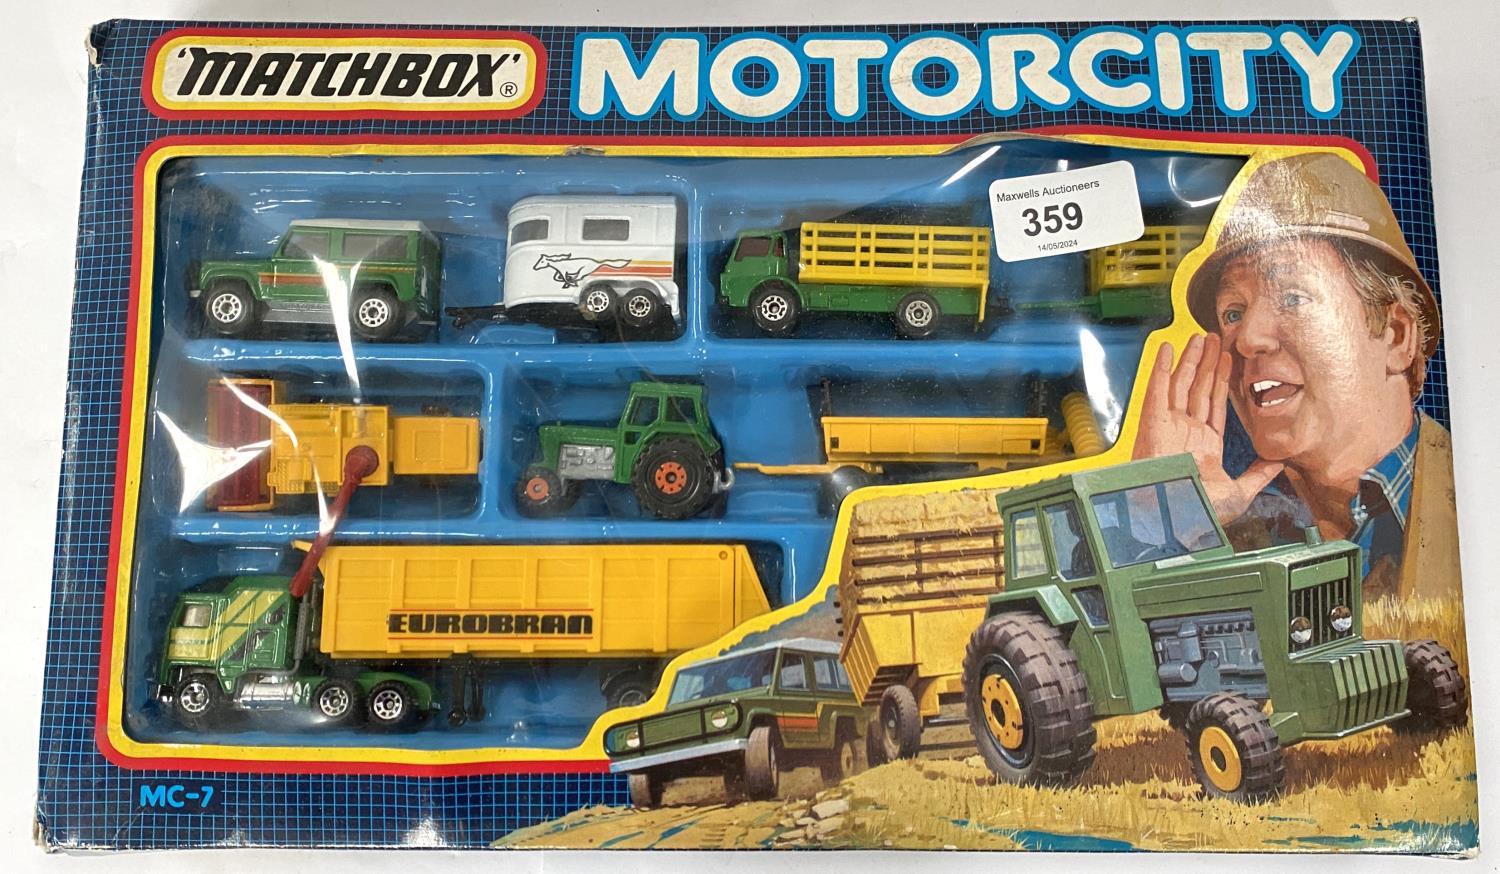 Matchbox Motorcity MC-7 set in original box - Image 2 of 2